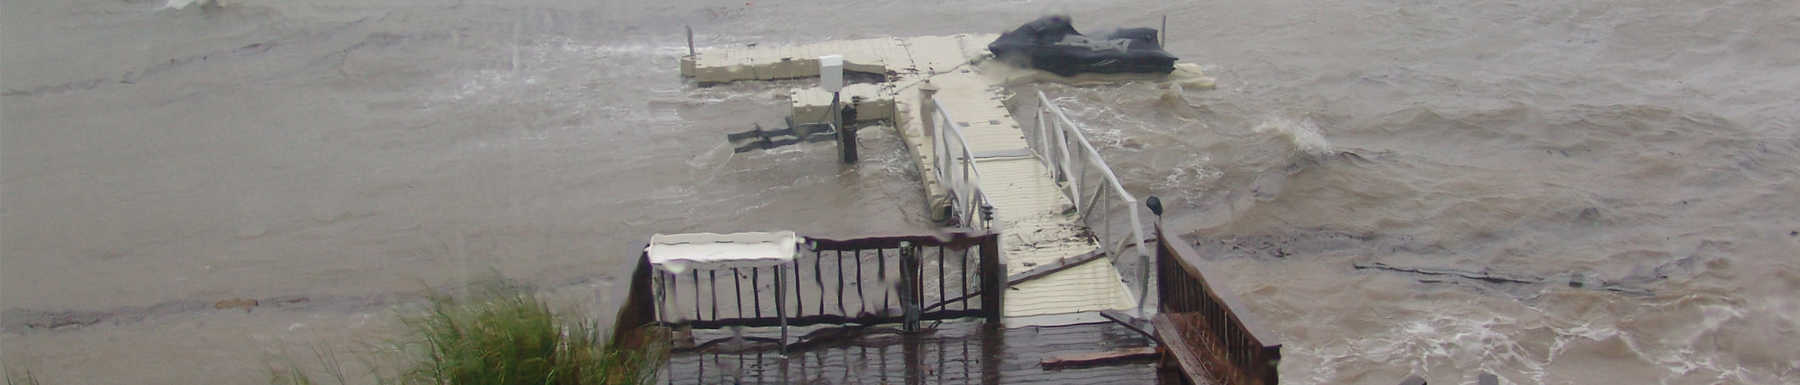 View of floating dock in rainstorm